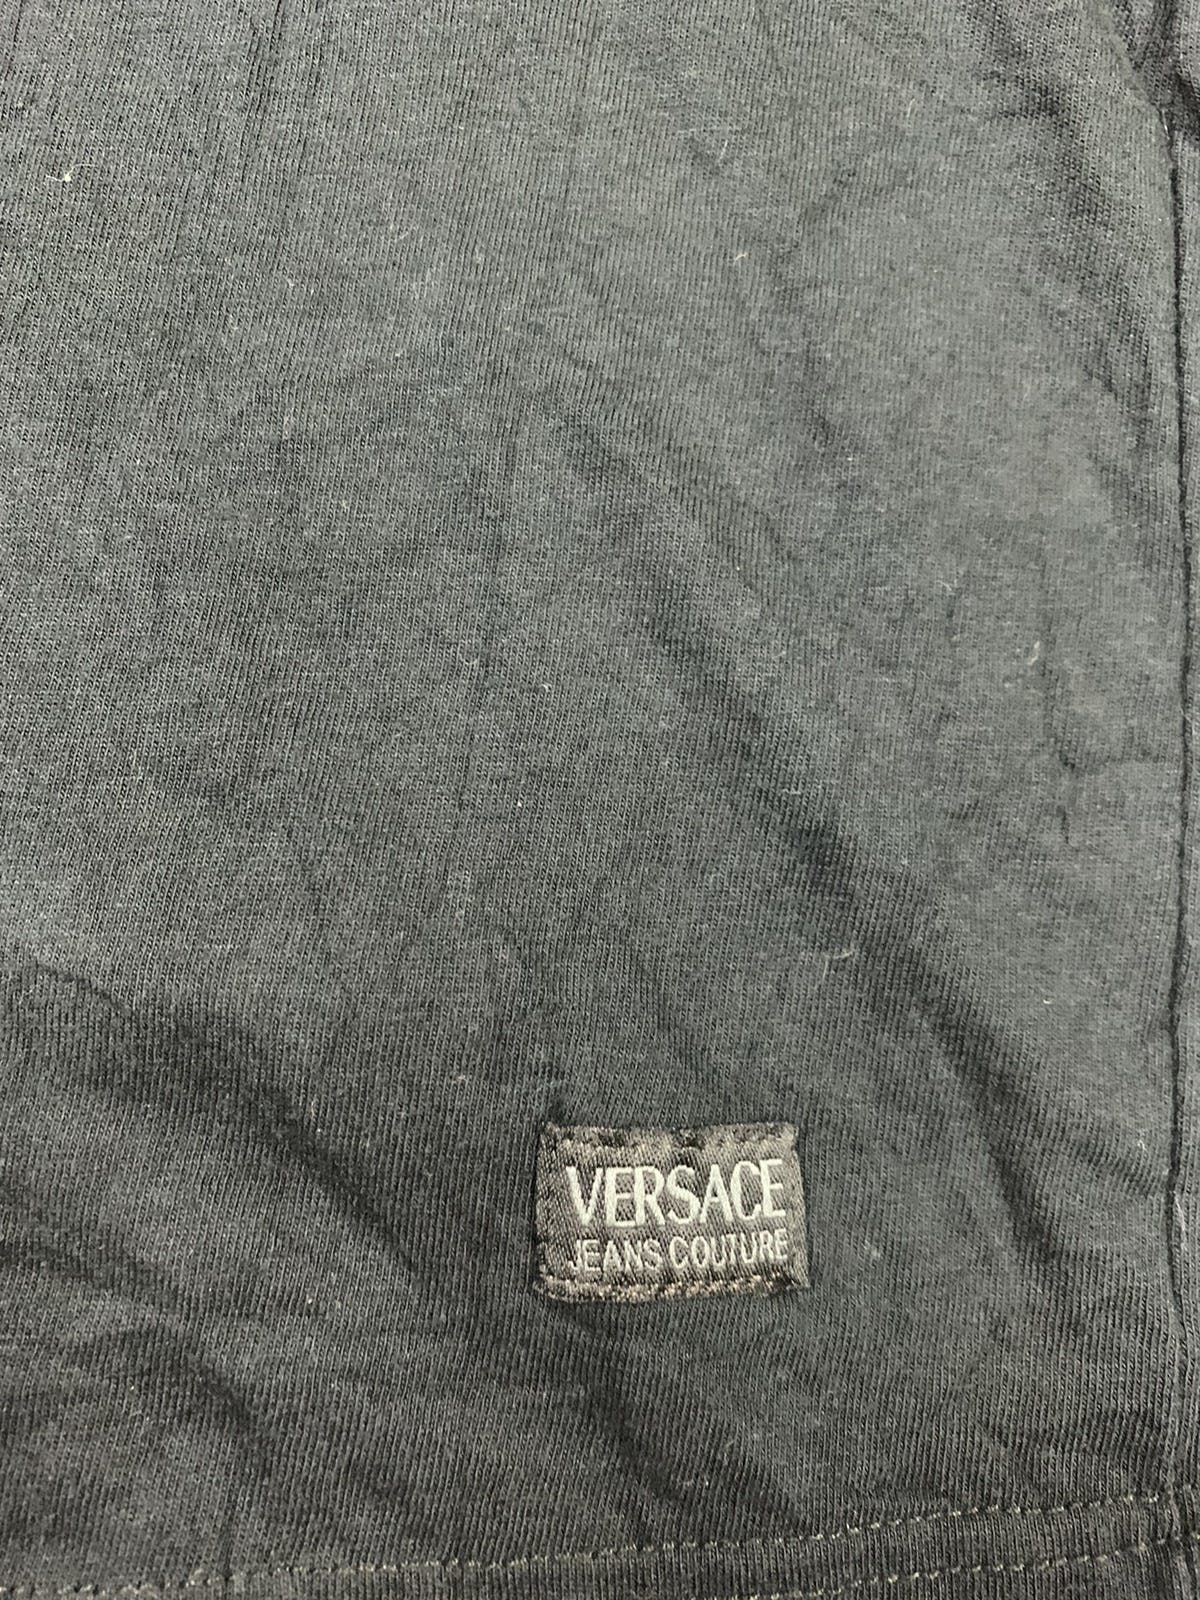 Versace jeans couture x bruce webber - 6